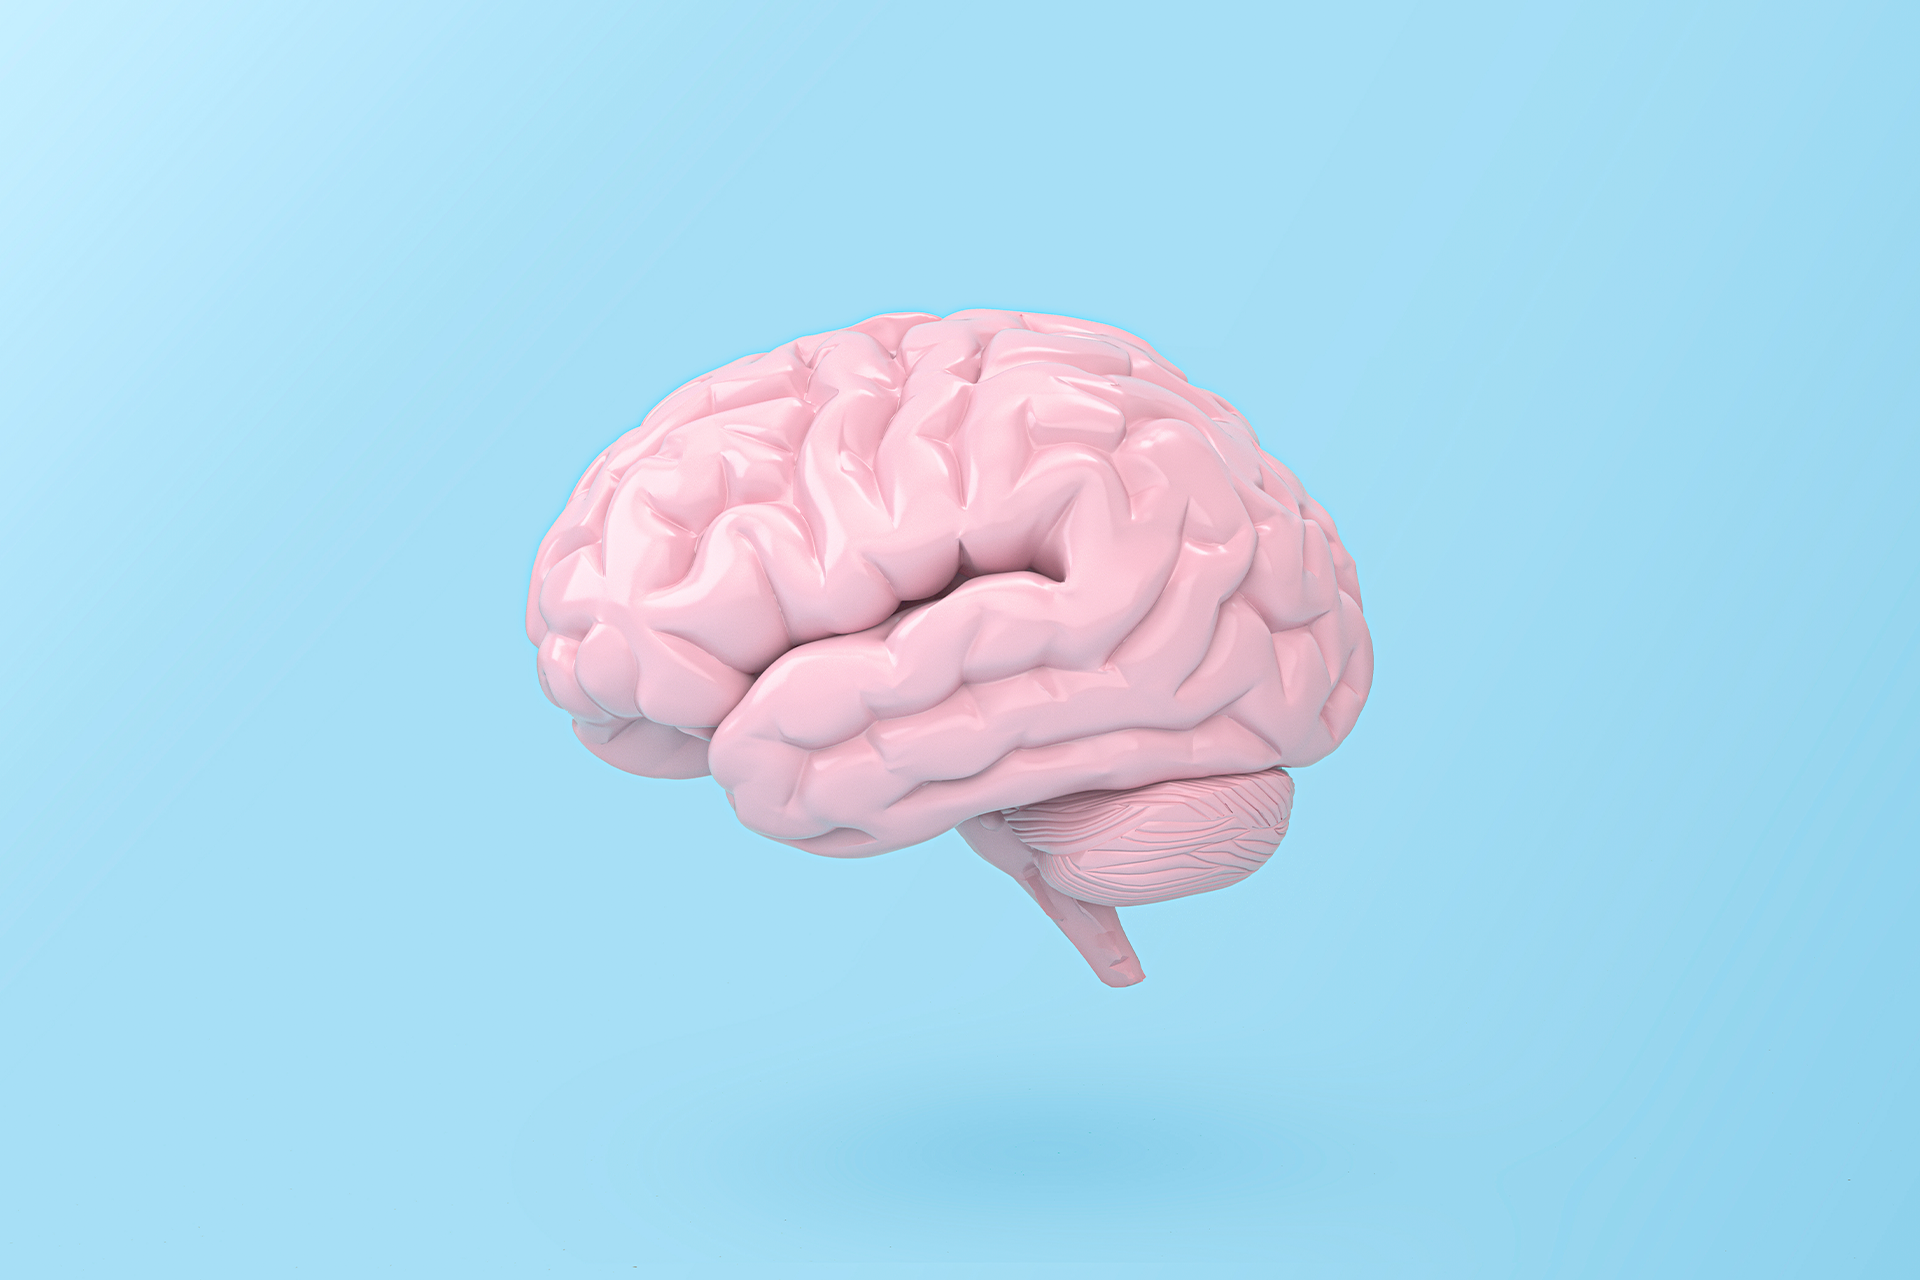 Image of human brain on blue background. Psychology of social media blog post